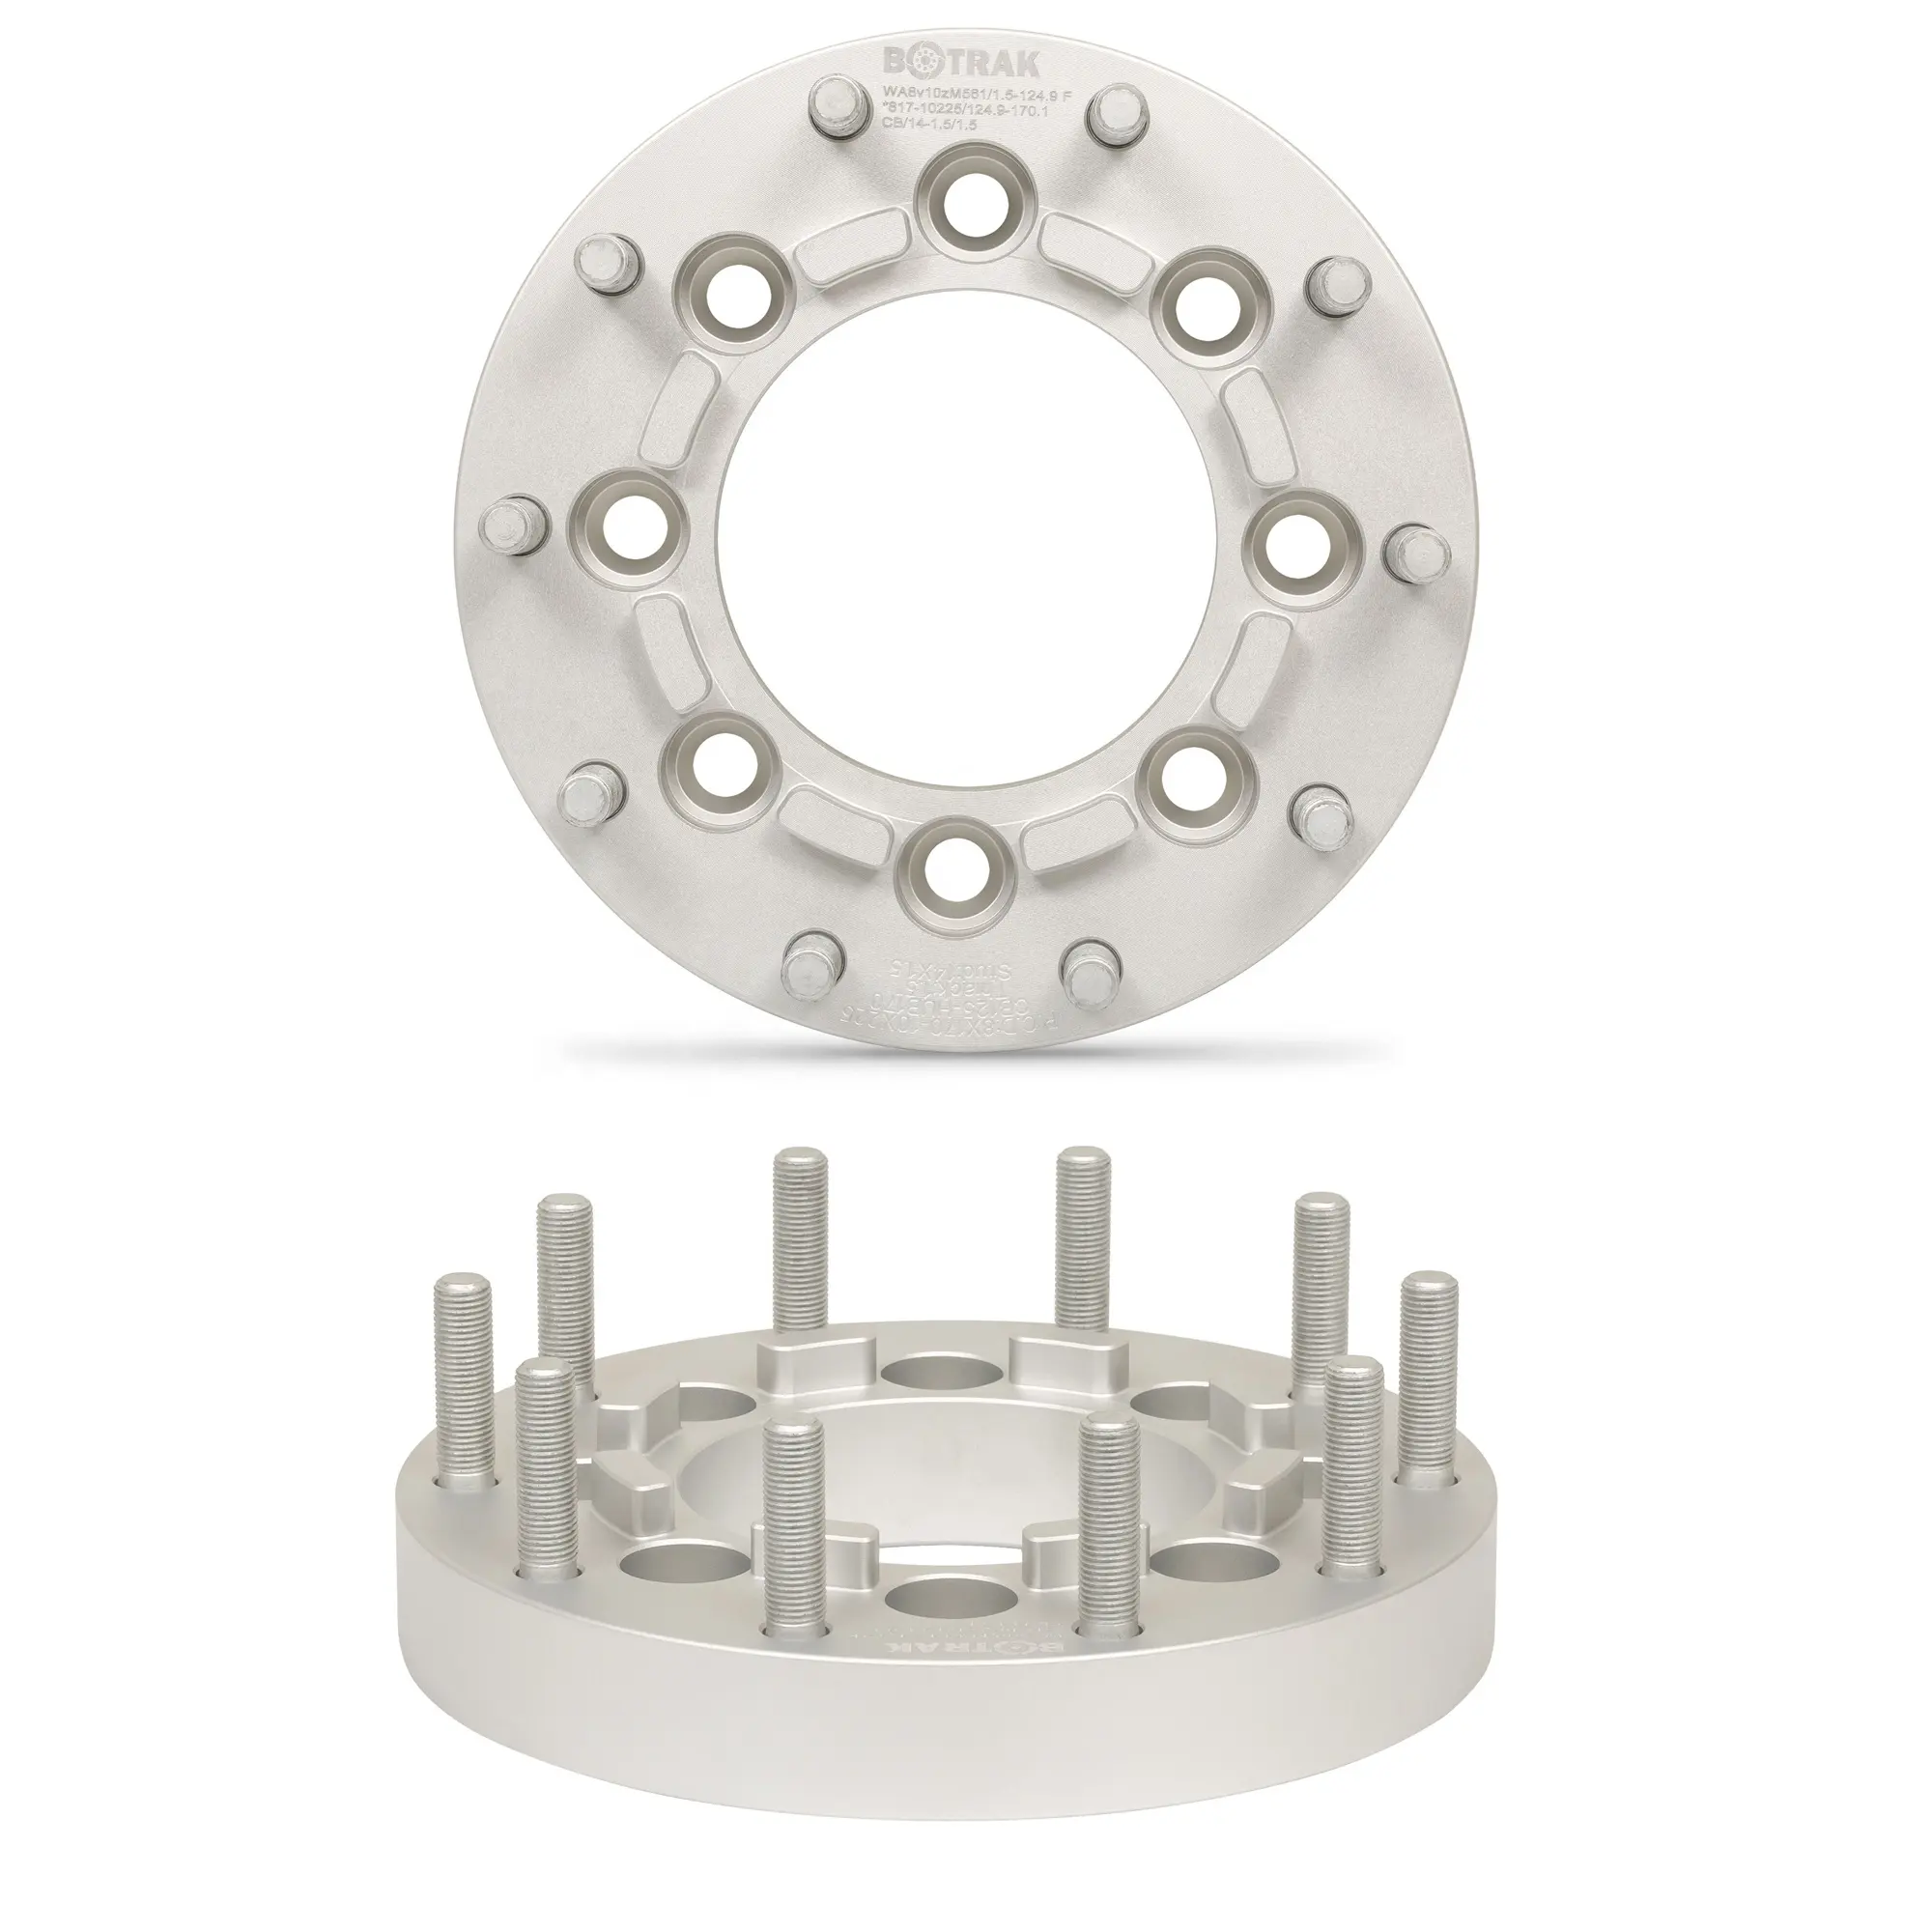 Bobrak adaptor spacer roda tunggal, 2.25 "8x180 ke 10x225 19.5" untuk gmc chevy silverado roda tunggal